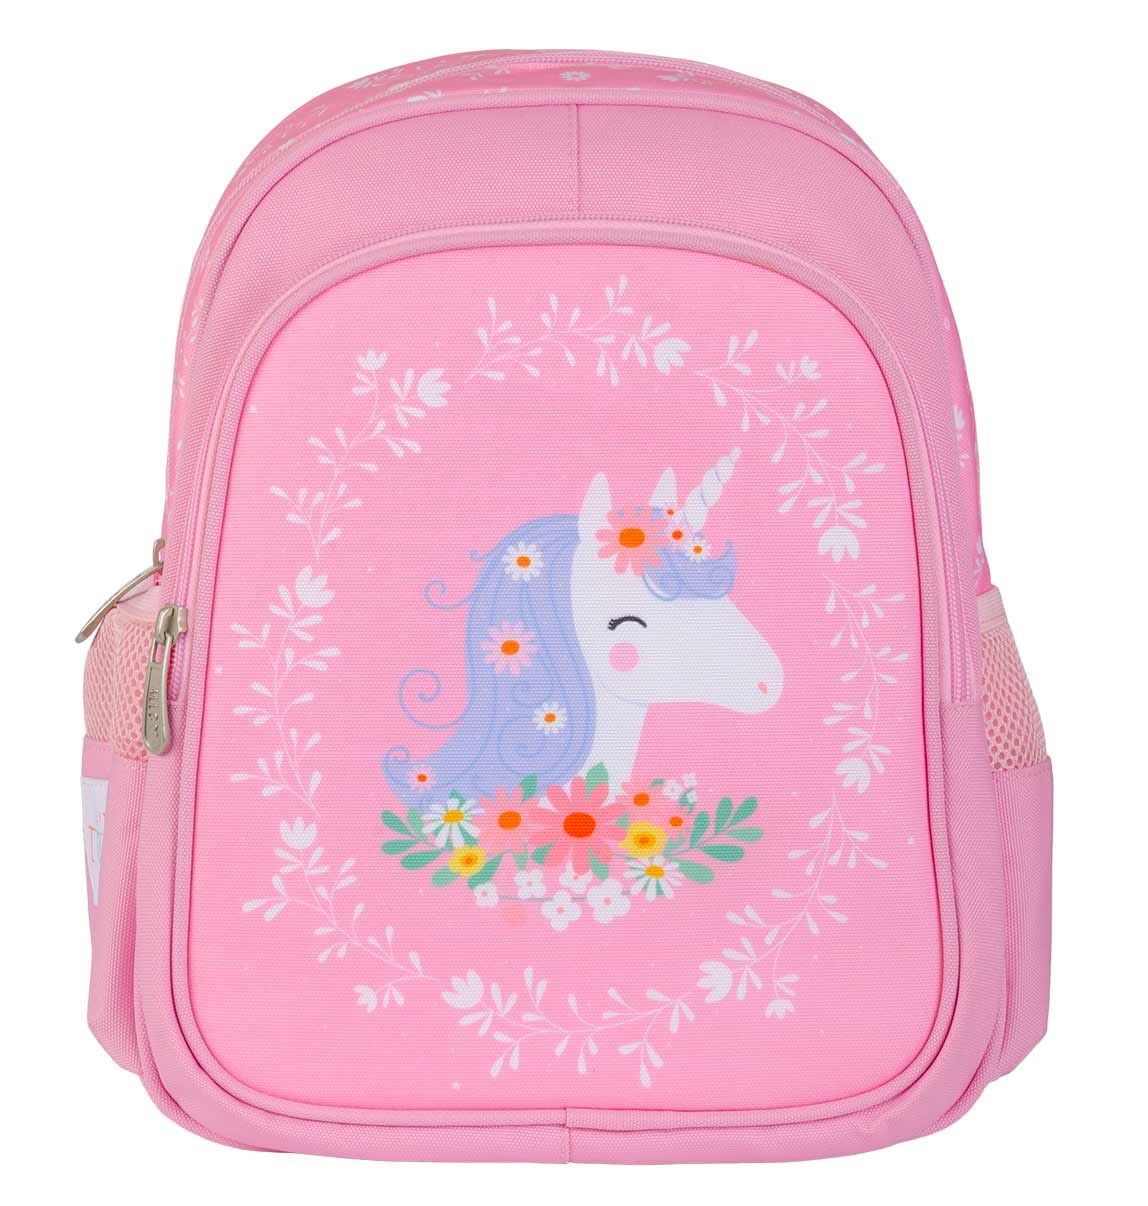 Unicorn School Bag with Horn and Ears